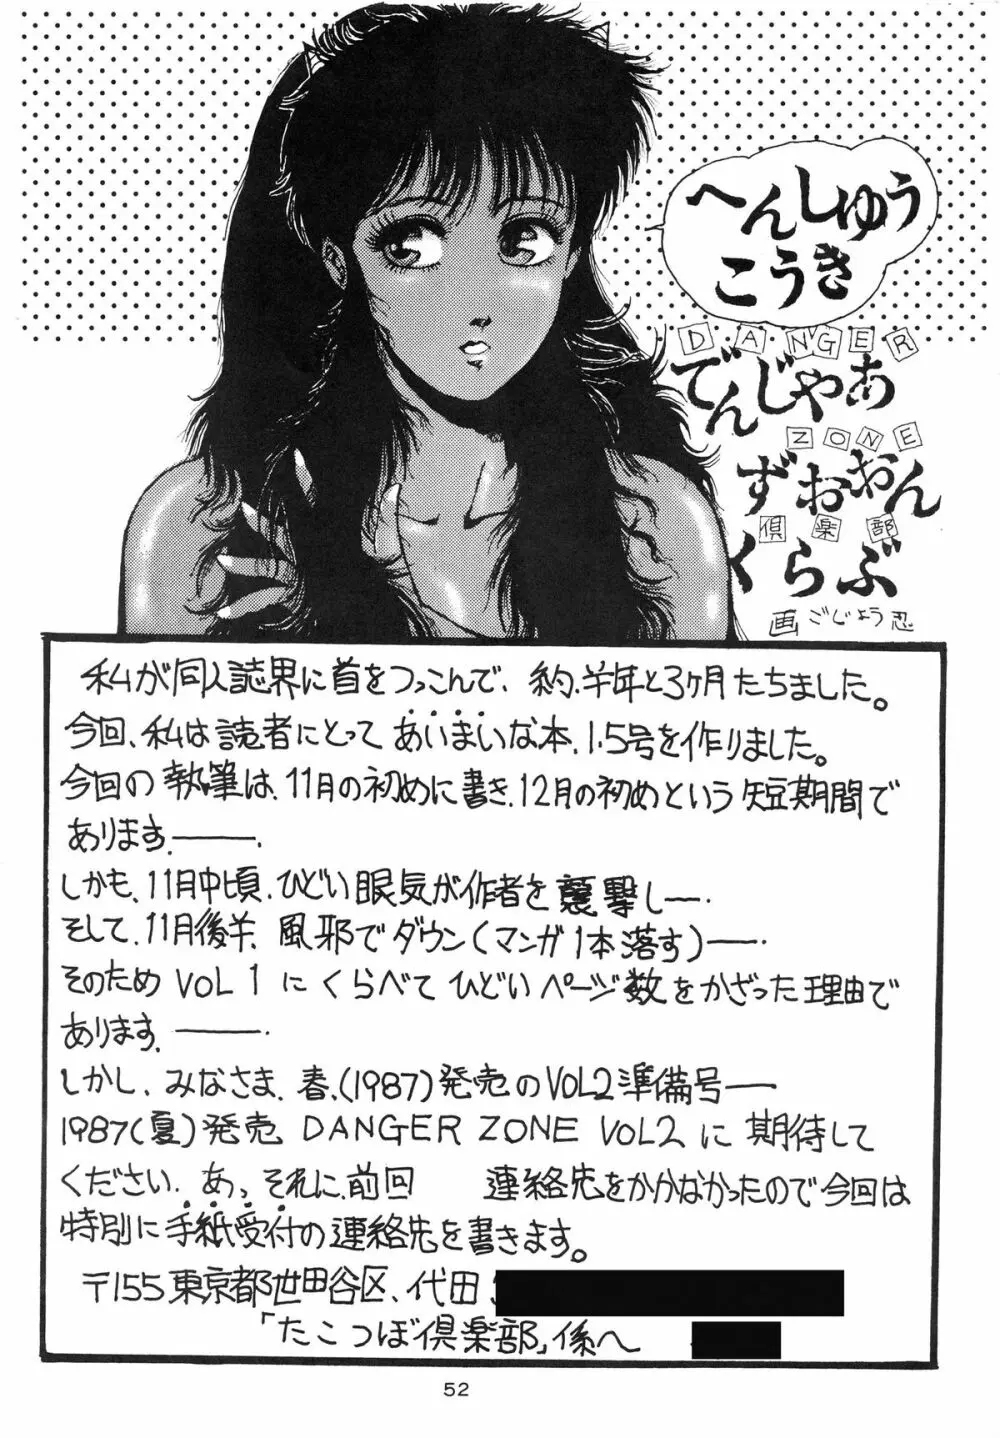 DANGER ZONE Vol.1.5 - page52